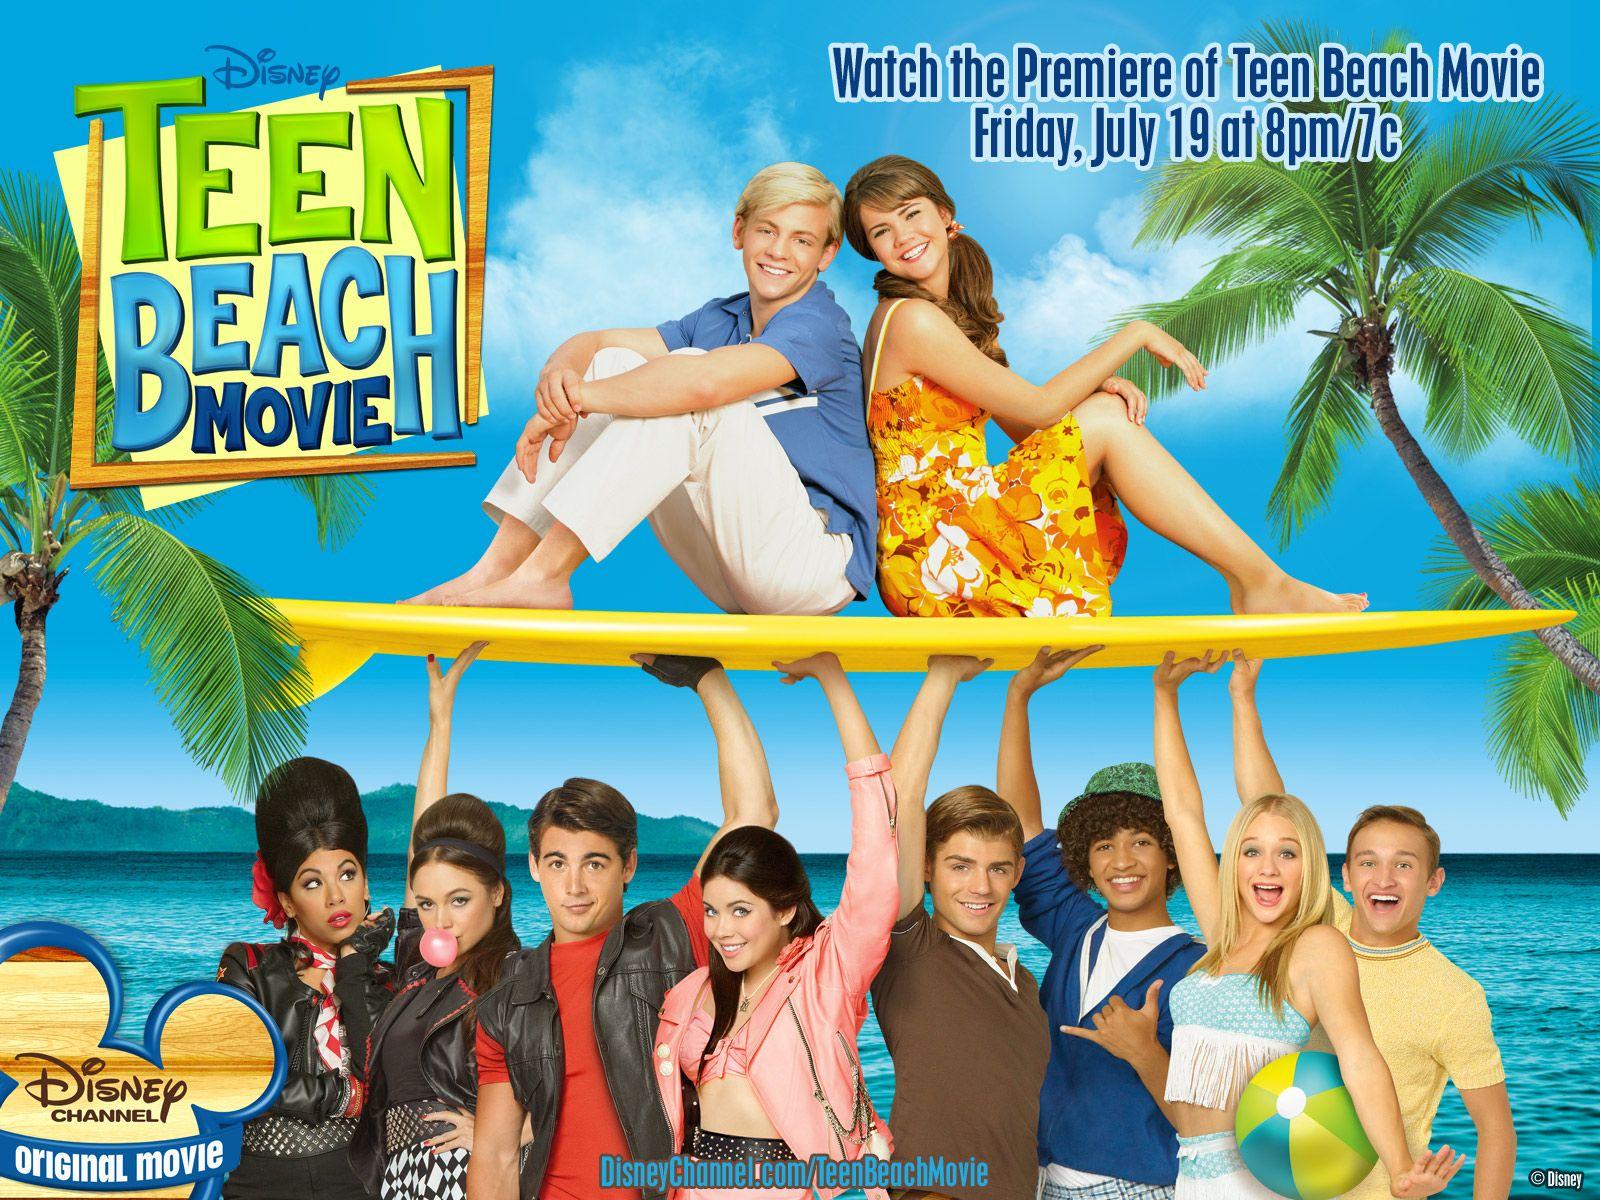 1600x1200px Teen Beach Movie 694.43 KB